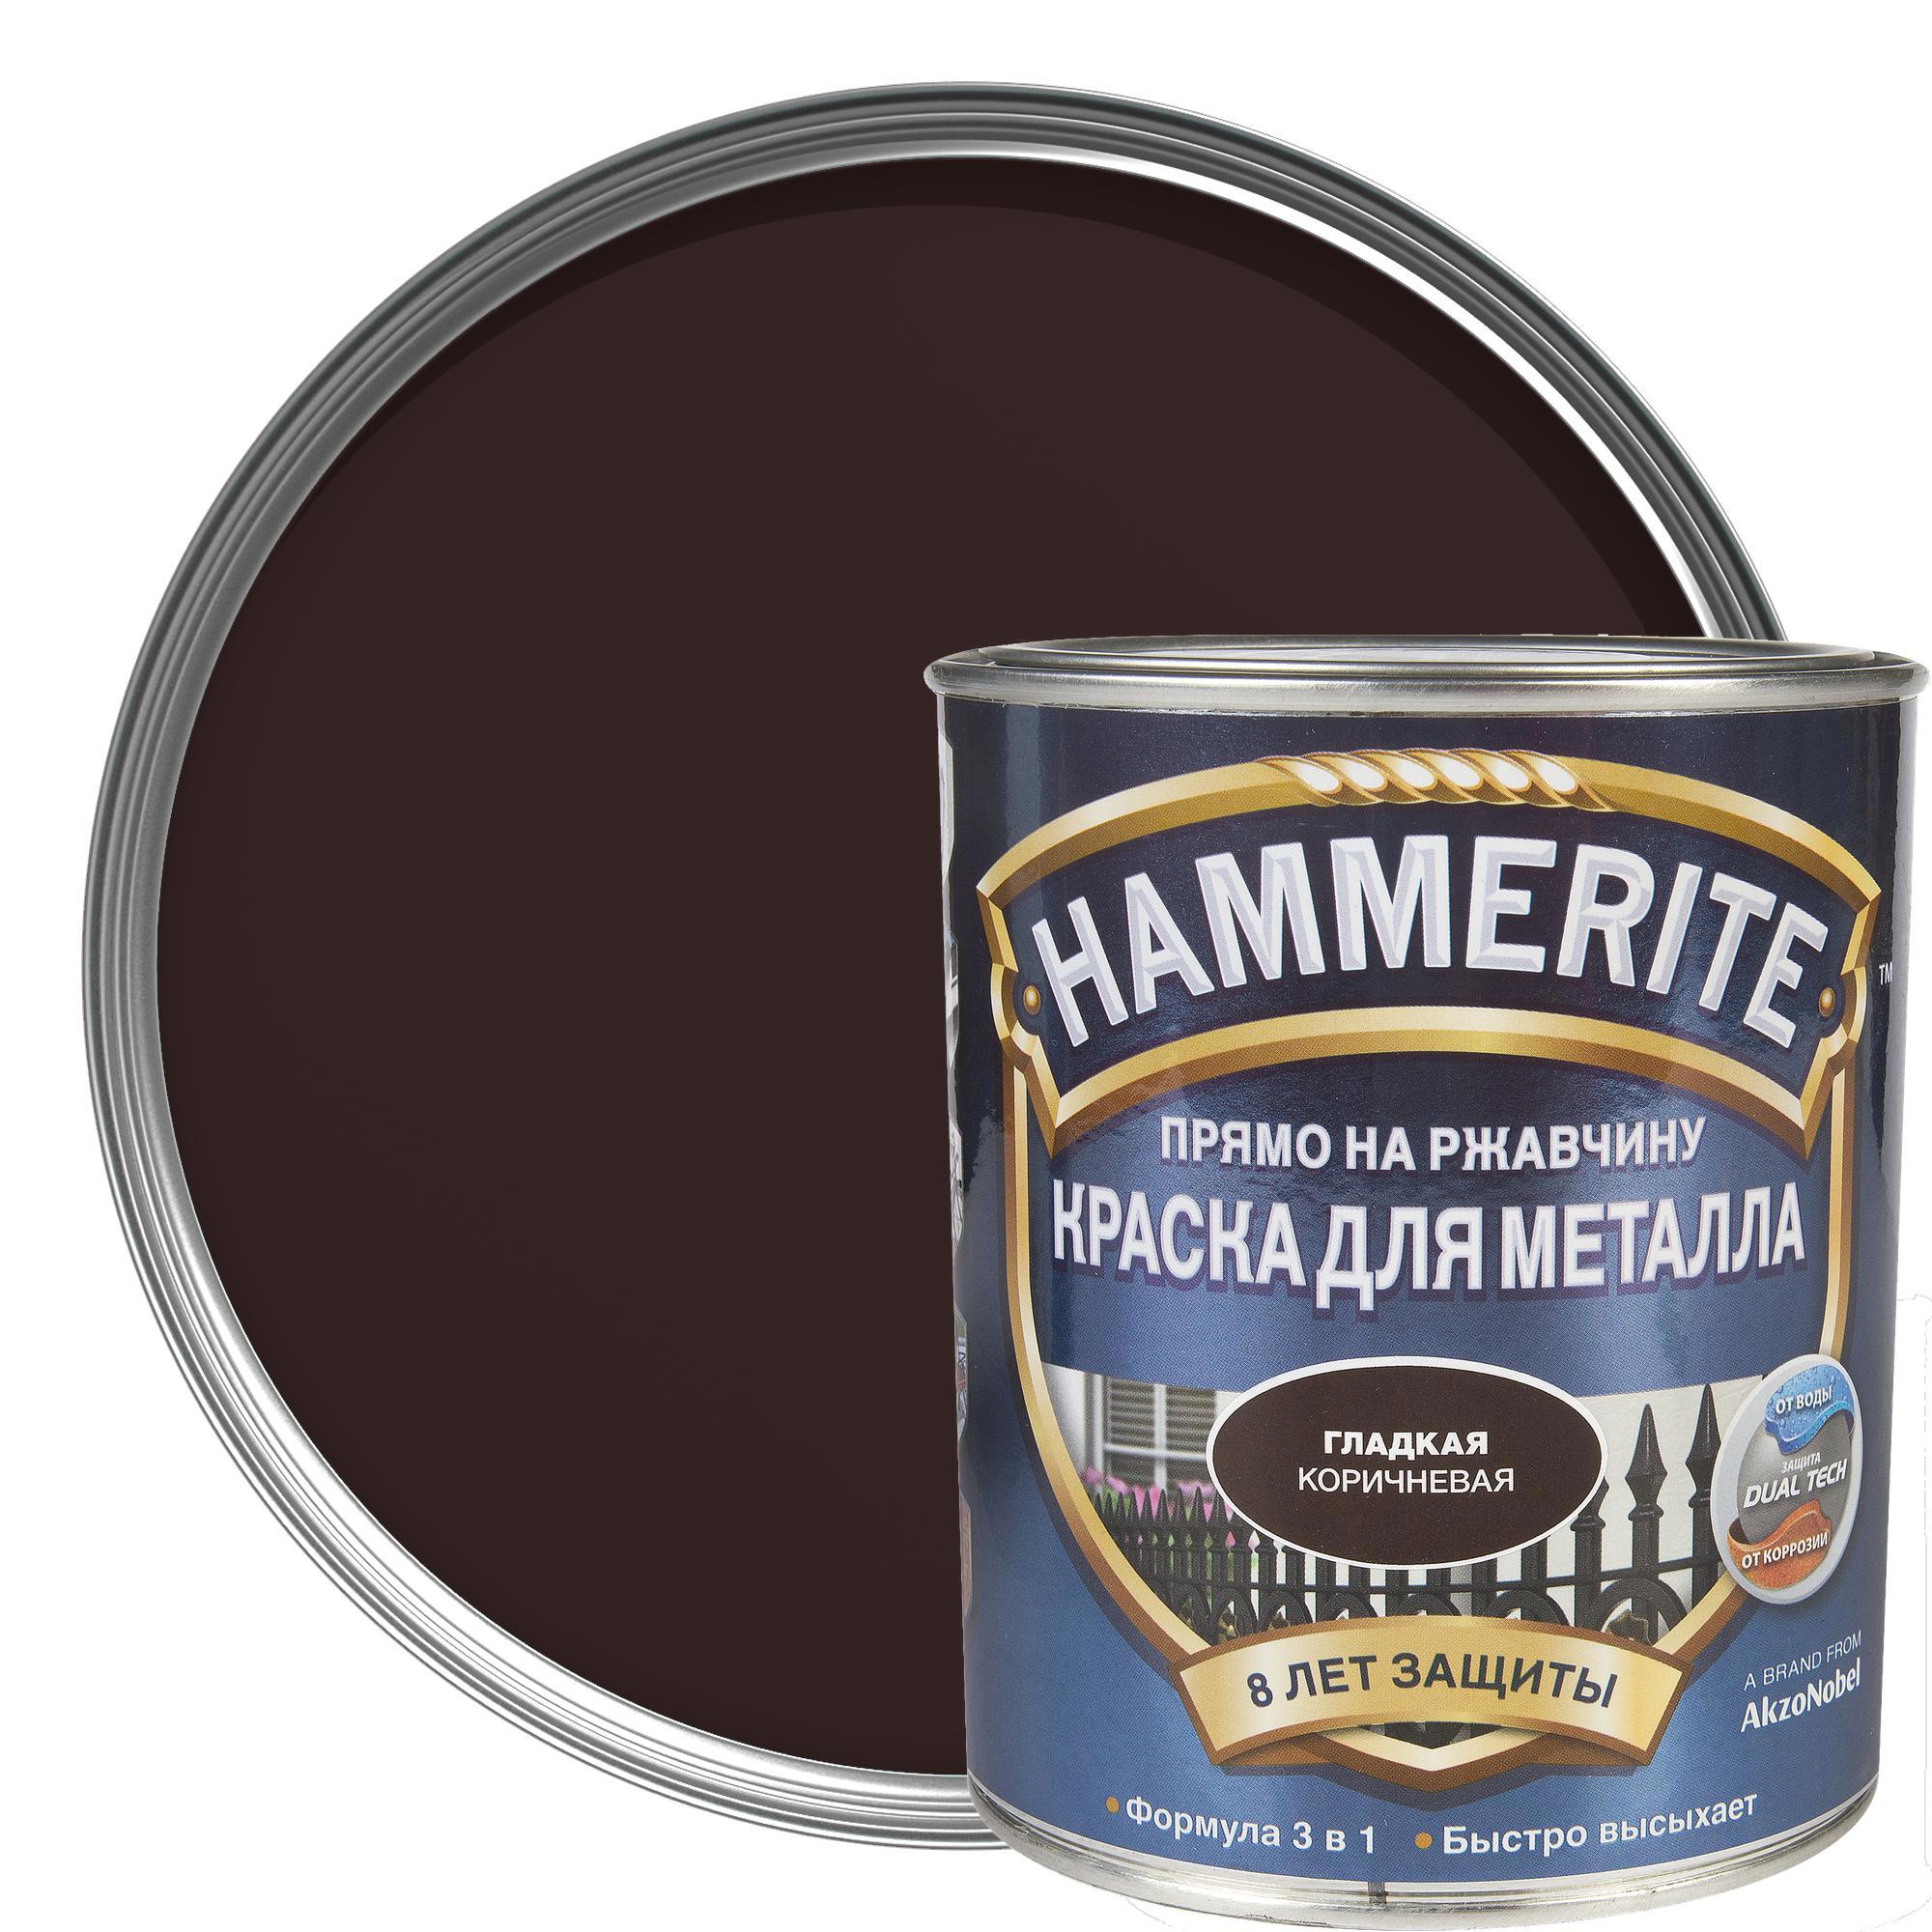 Купить краску по металлу и ржавчине. Хаммерайт 3 в 1. Краска молотковая Hammerite цвет коричневый. Краска Hammerite total глянцевая коричневая RAL 8017 2,2л. Хаммерайт краска 0,75 л коричневый.